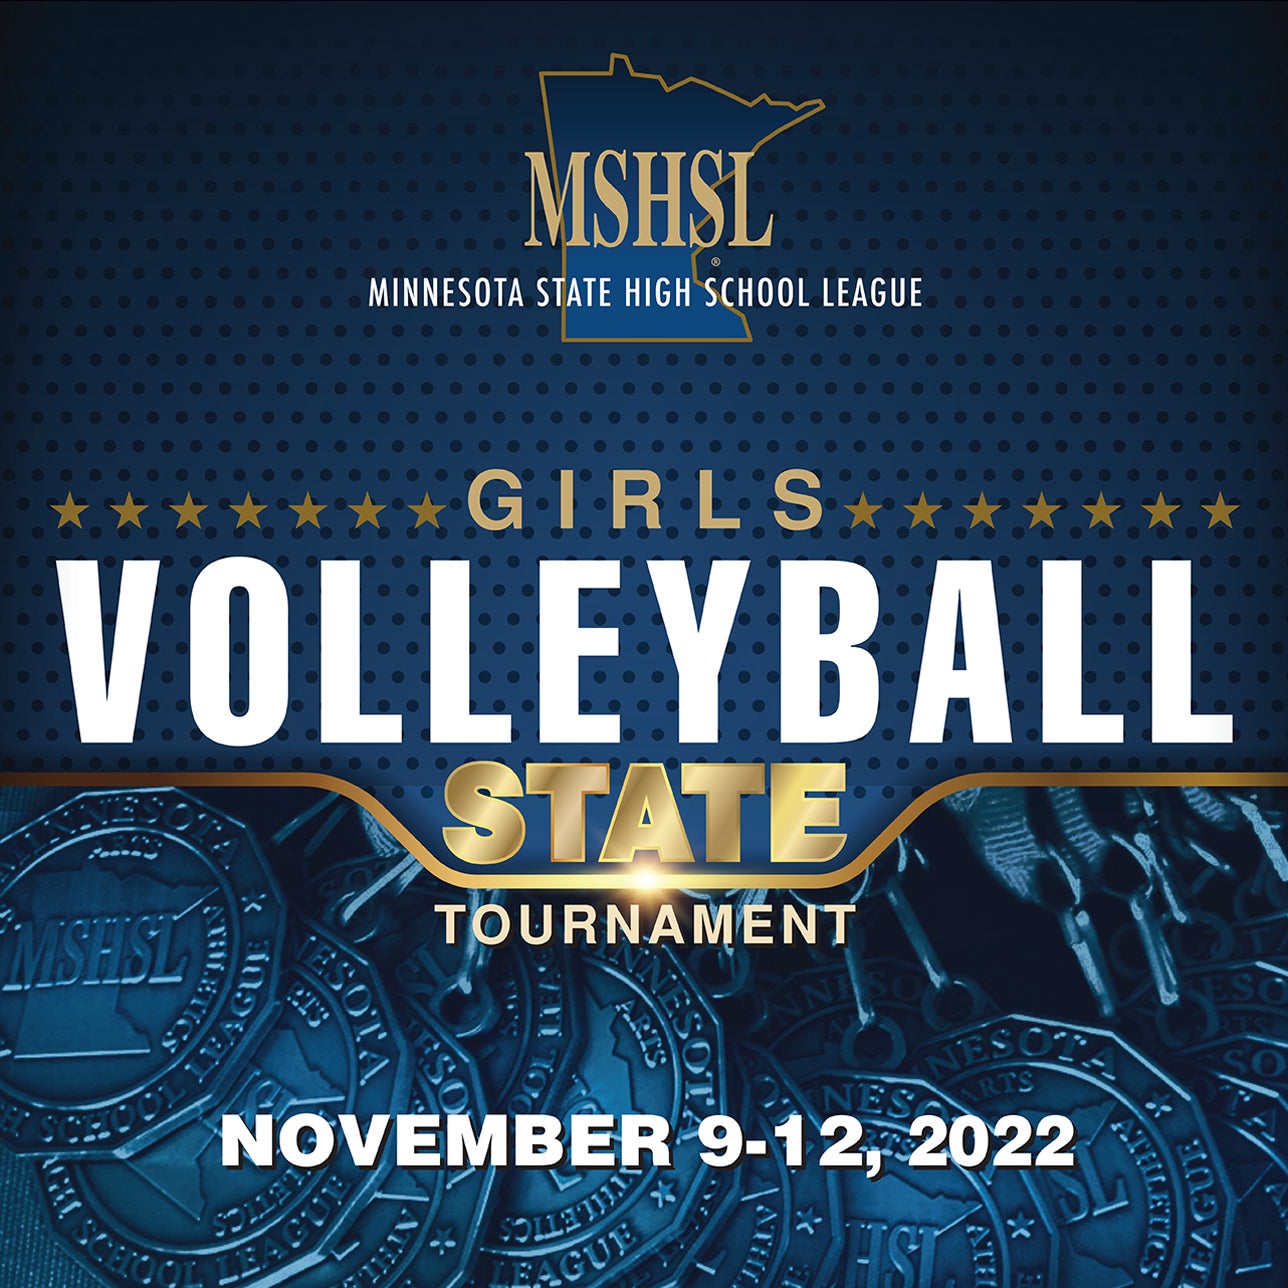 MSHSL Girls Volleyball State Tournament 